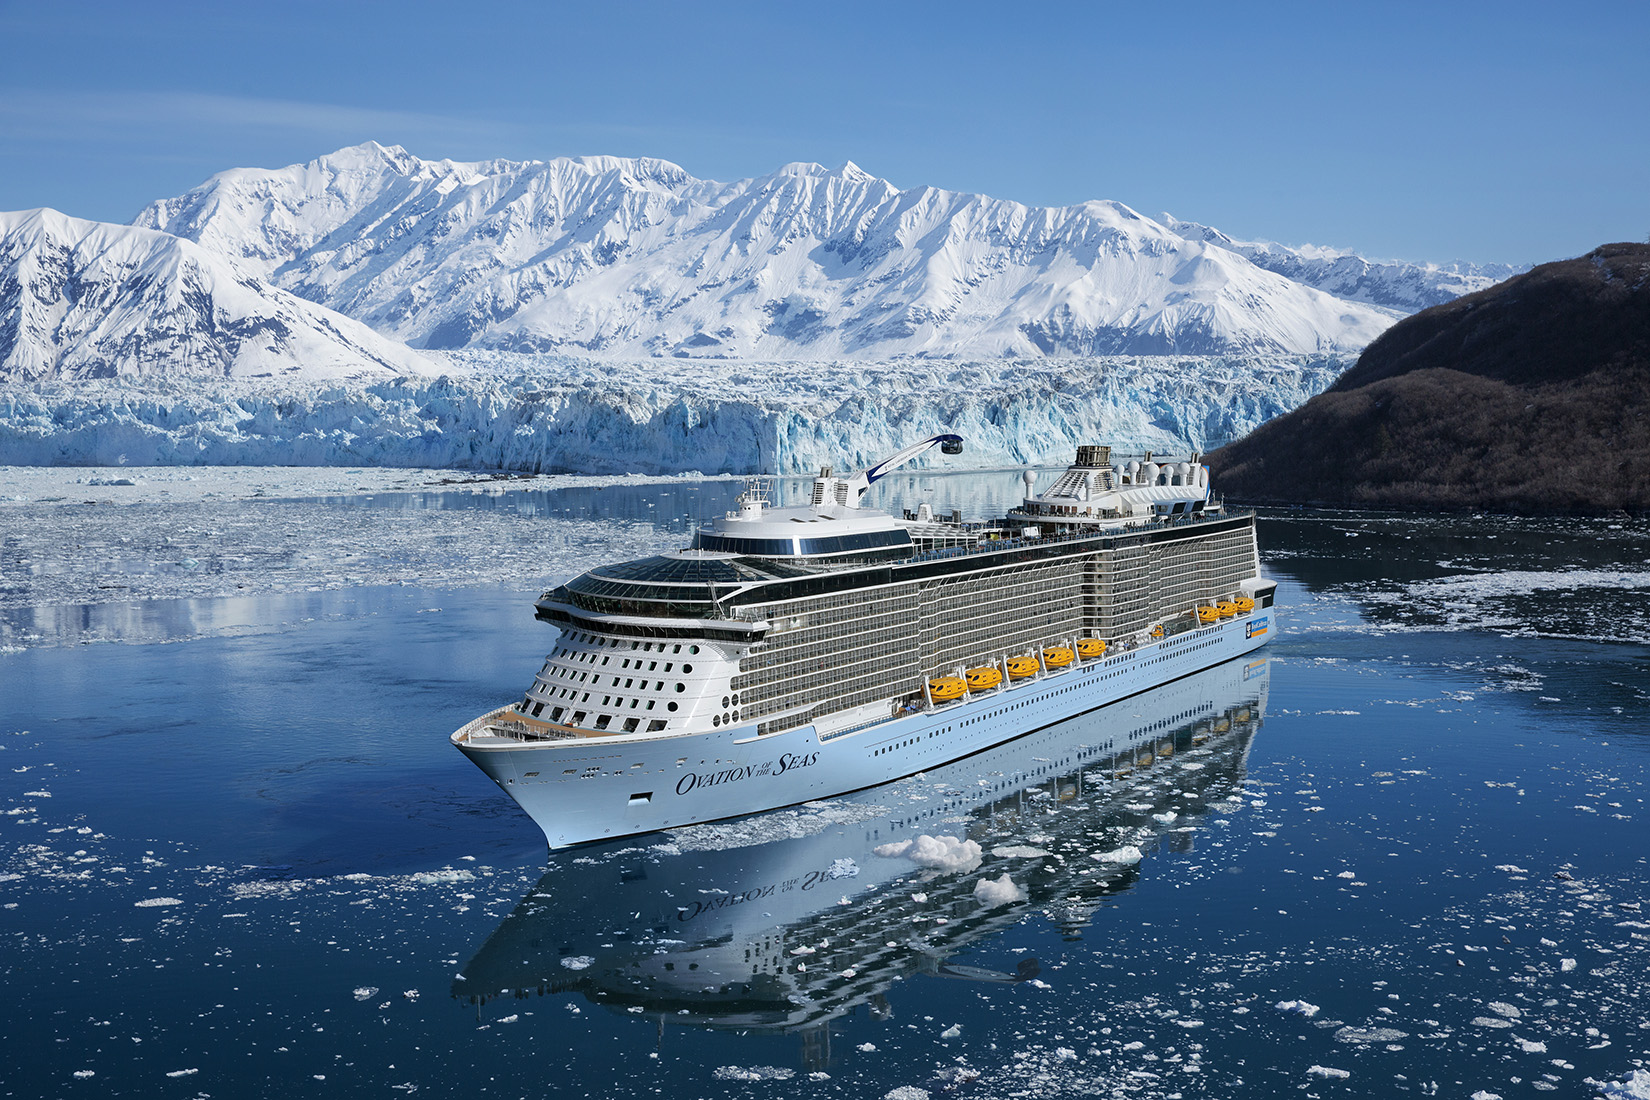 Royal Caribbean's 2023 Alaska & Hawaii Sailings are Now Available to